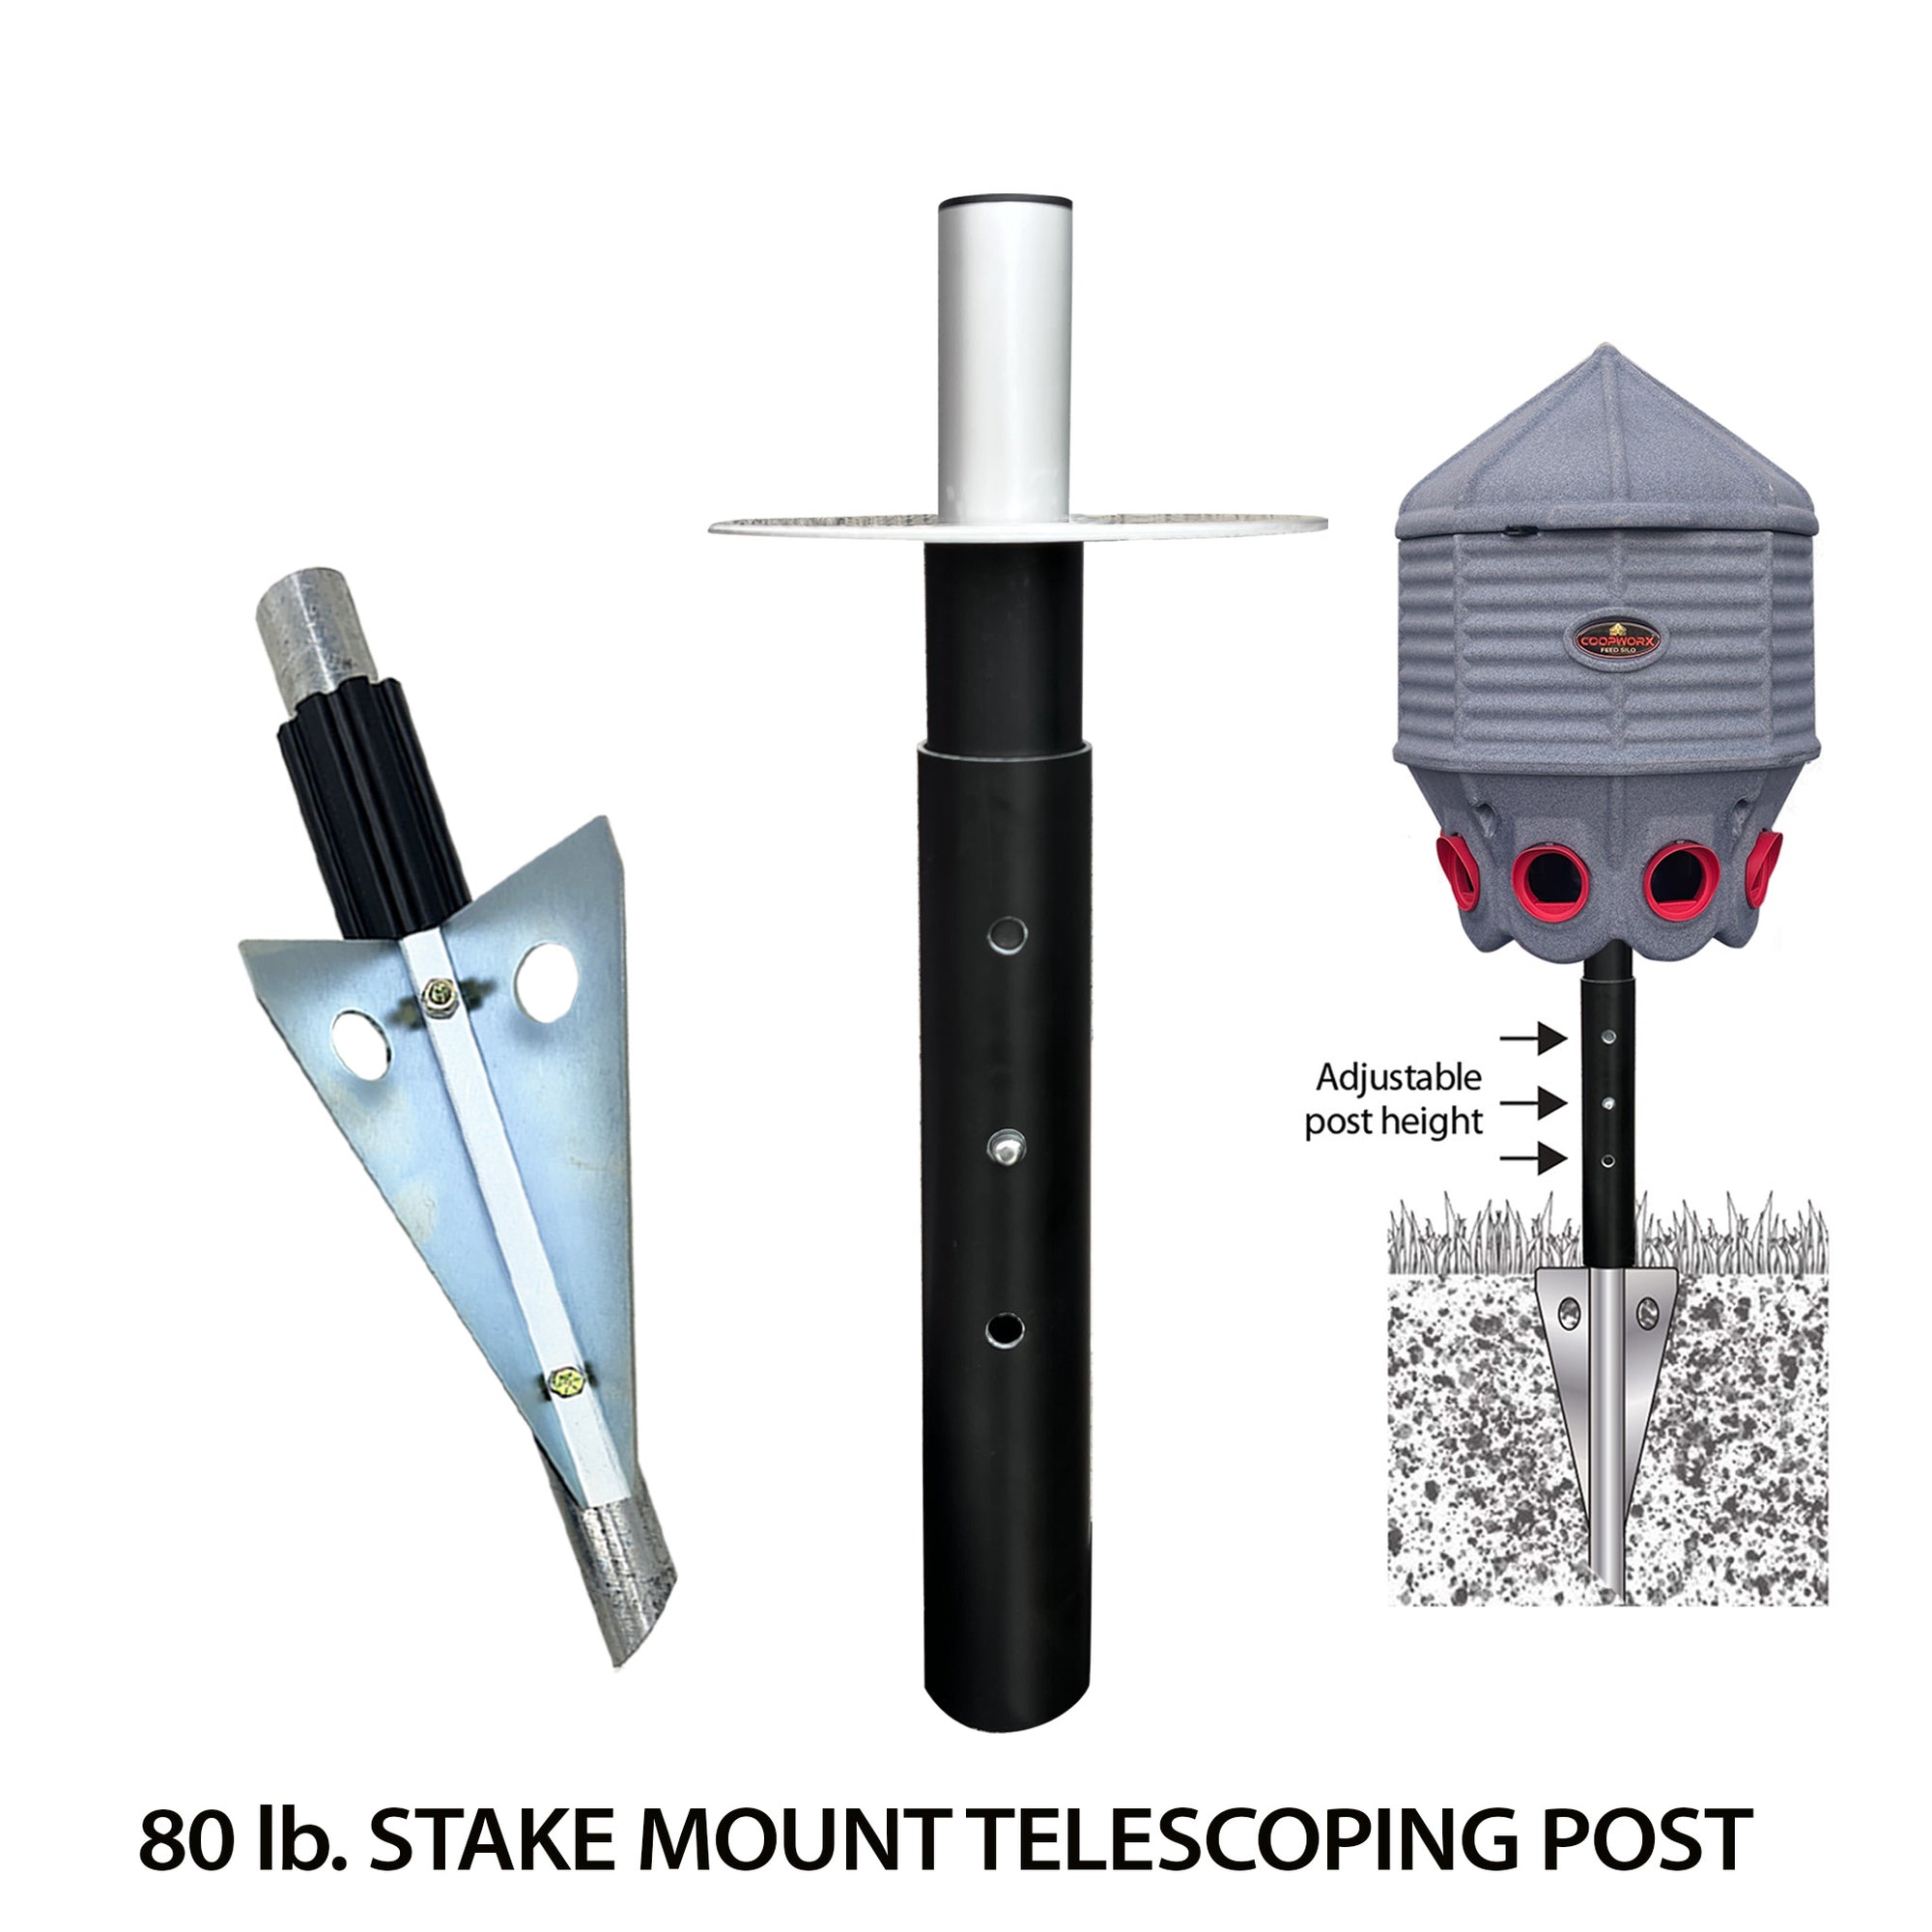 STAKE MOUNT W/ TELESCOPING POST